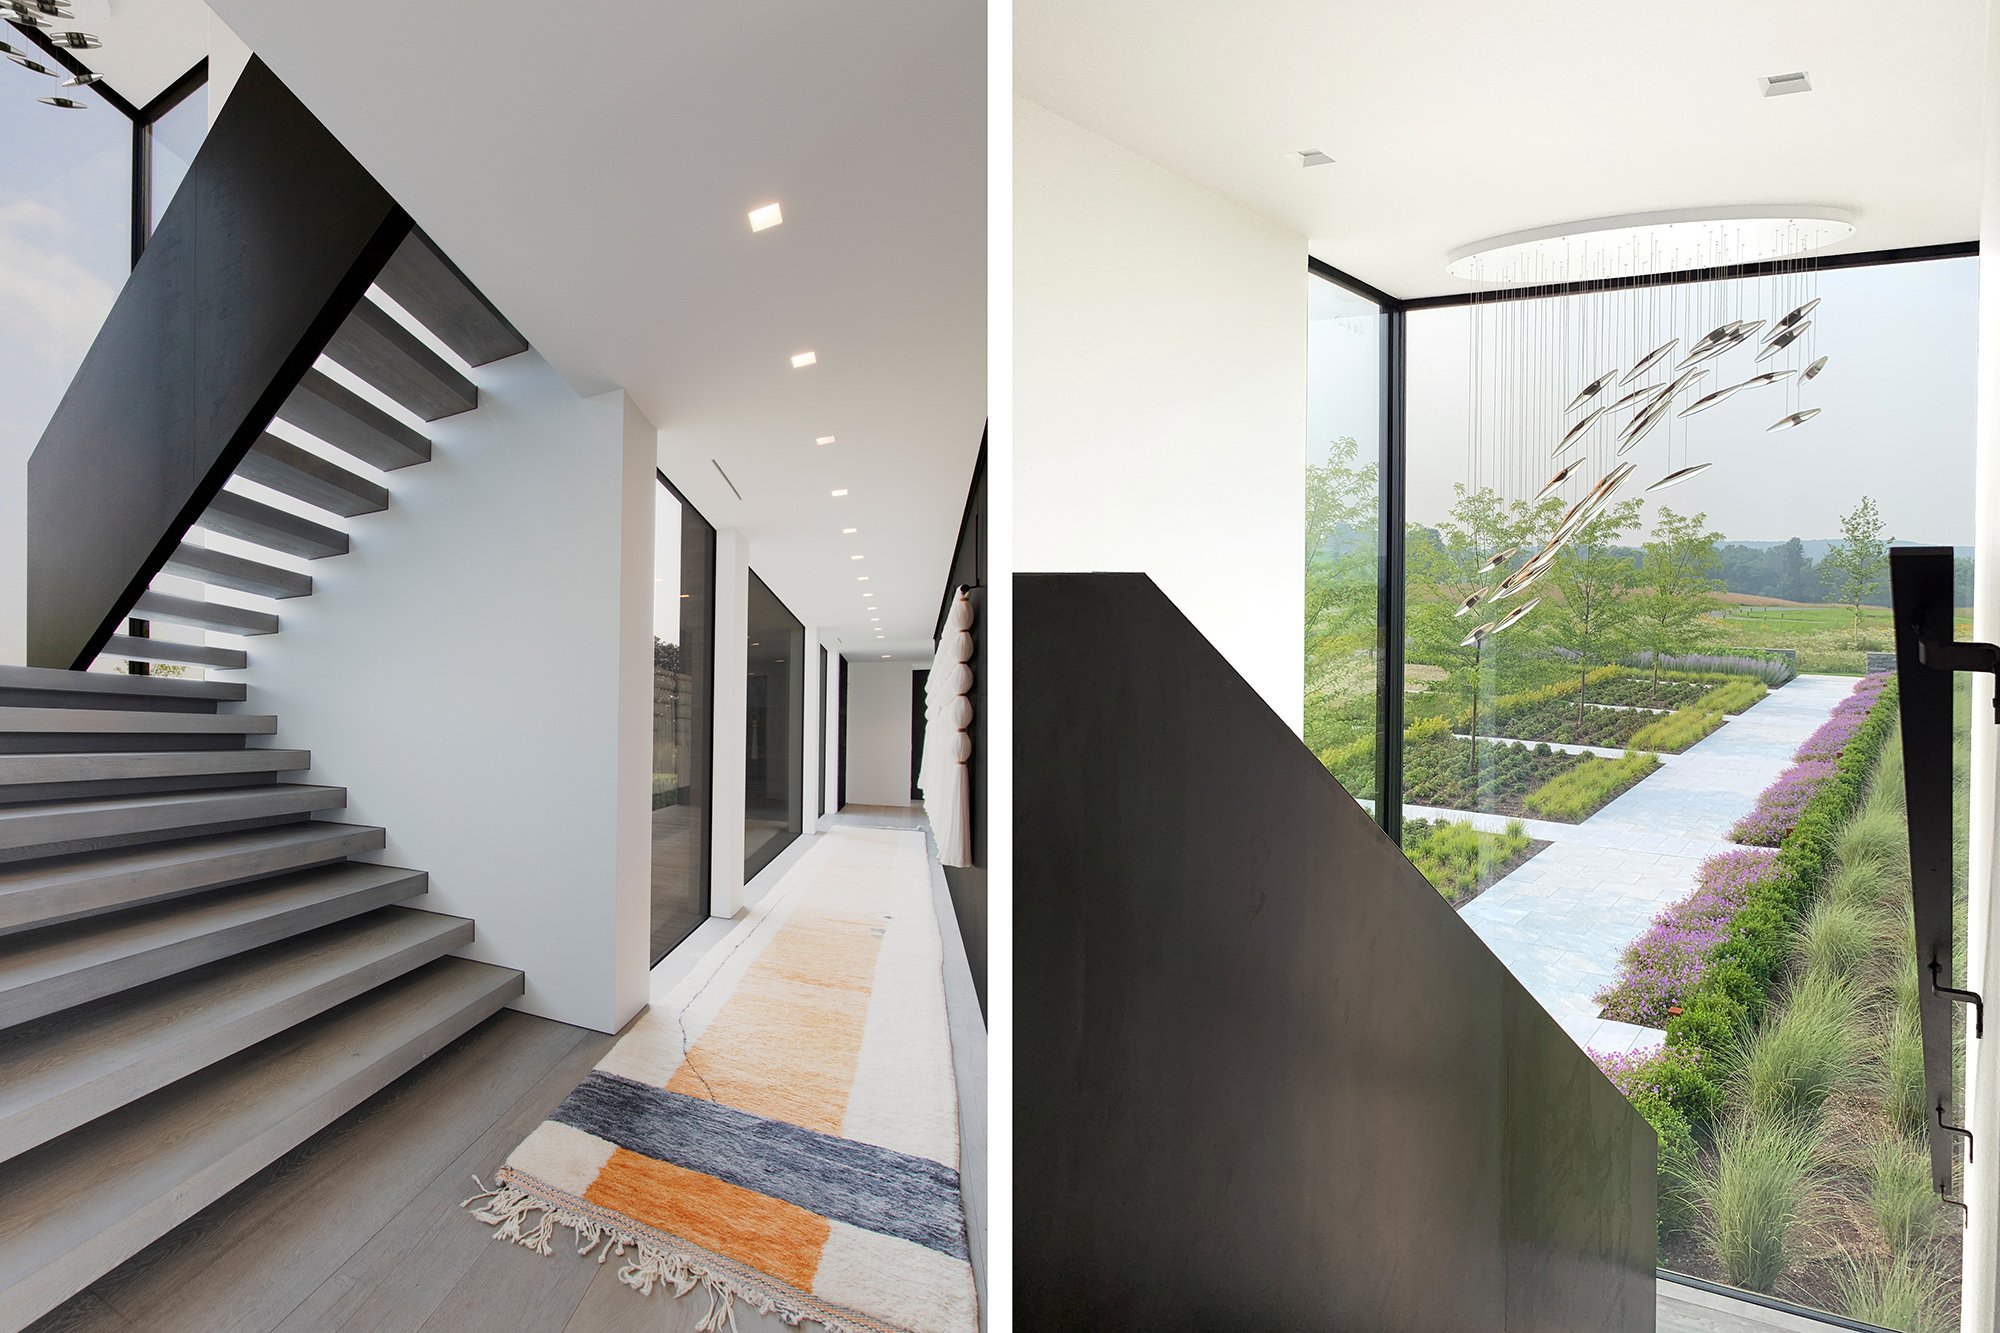 30_res4-resolution-4-architecture-millbrook-residence-modern-home-new-york-hudson-valley-custom-high-end-residential-floating-stair.jpg